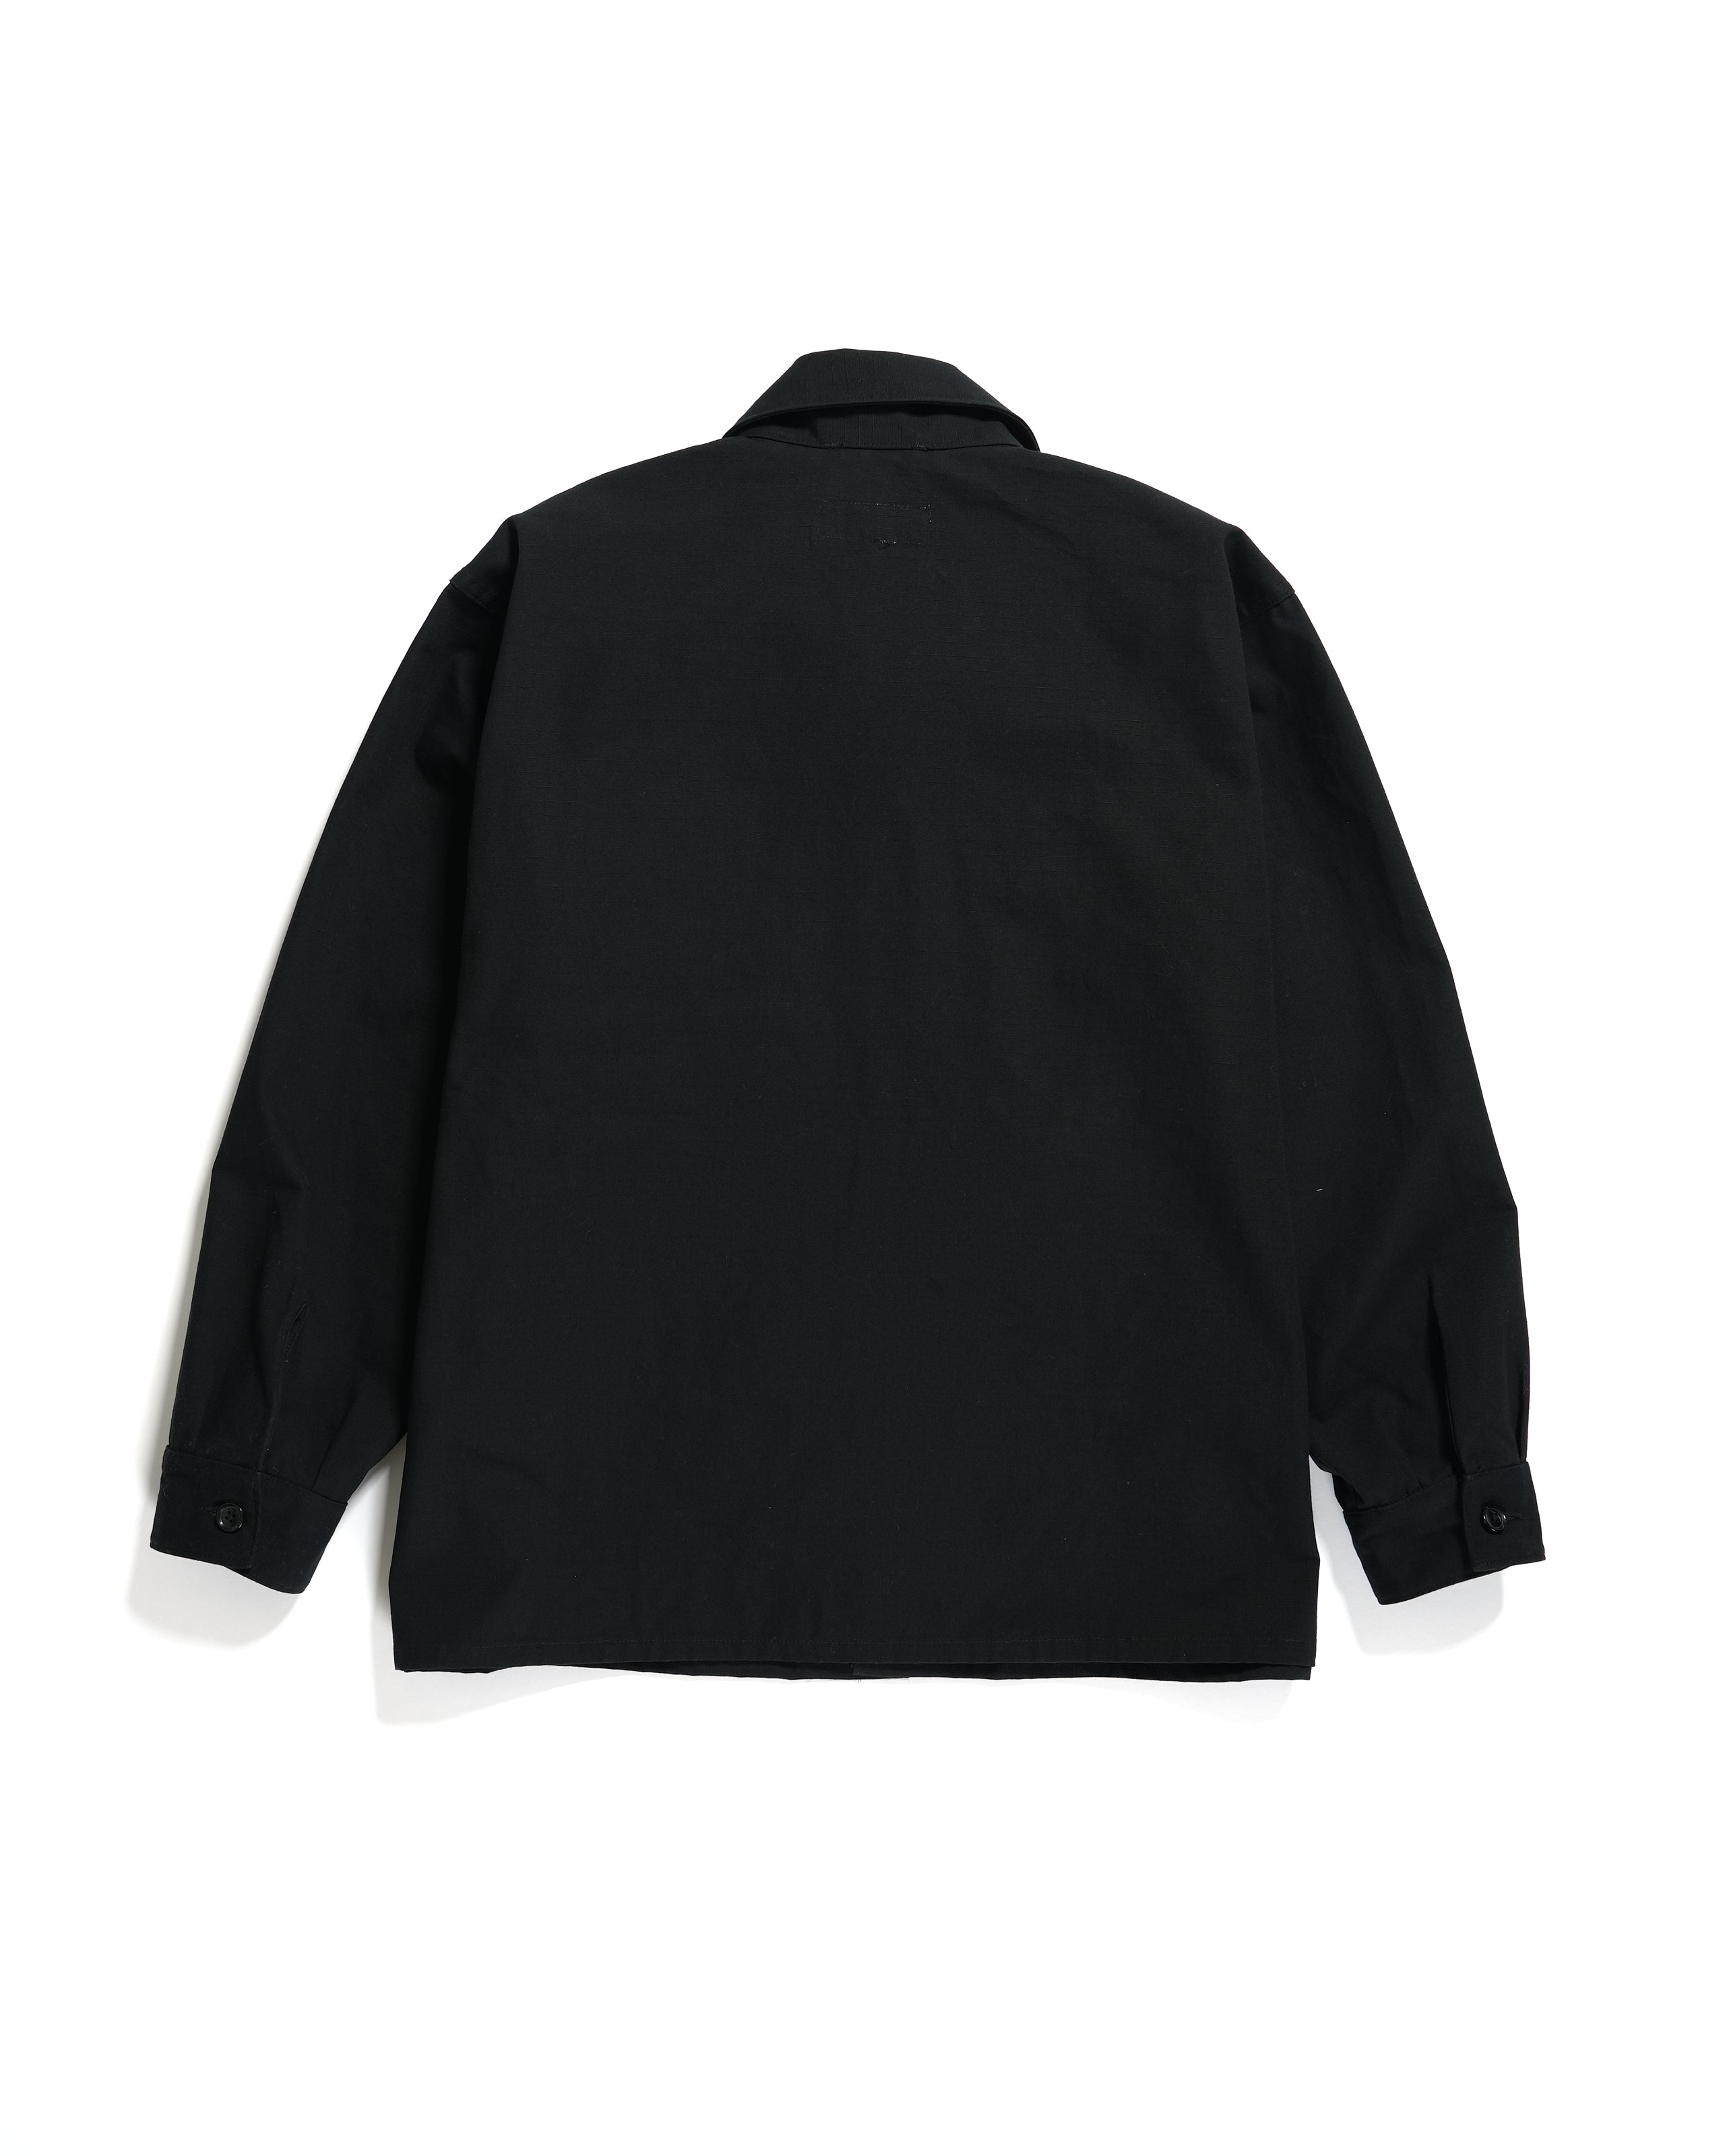 MC Shirt Jacket - Black Heavyweight Cotton Ripstop